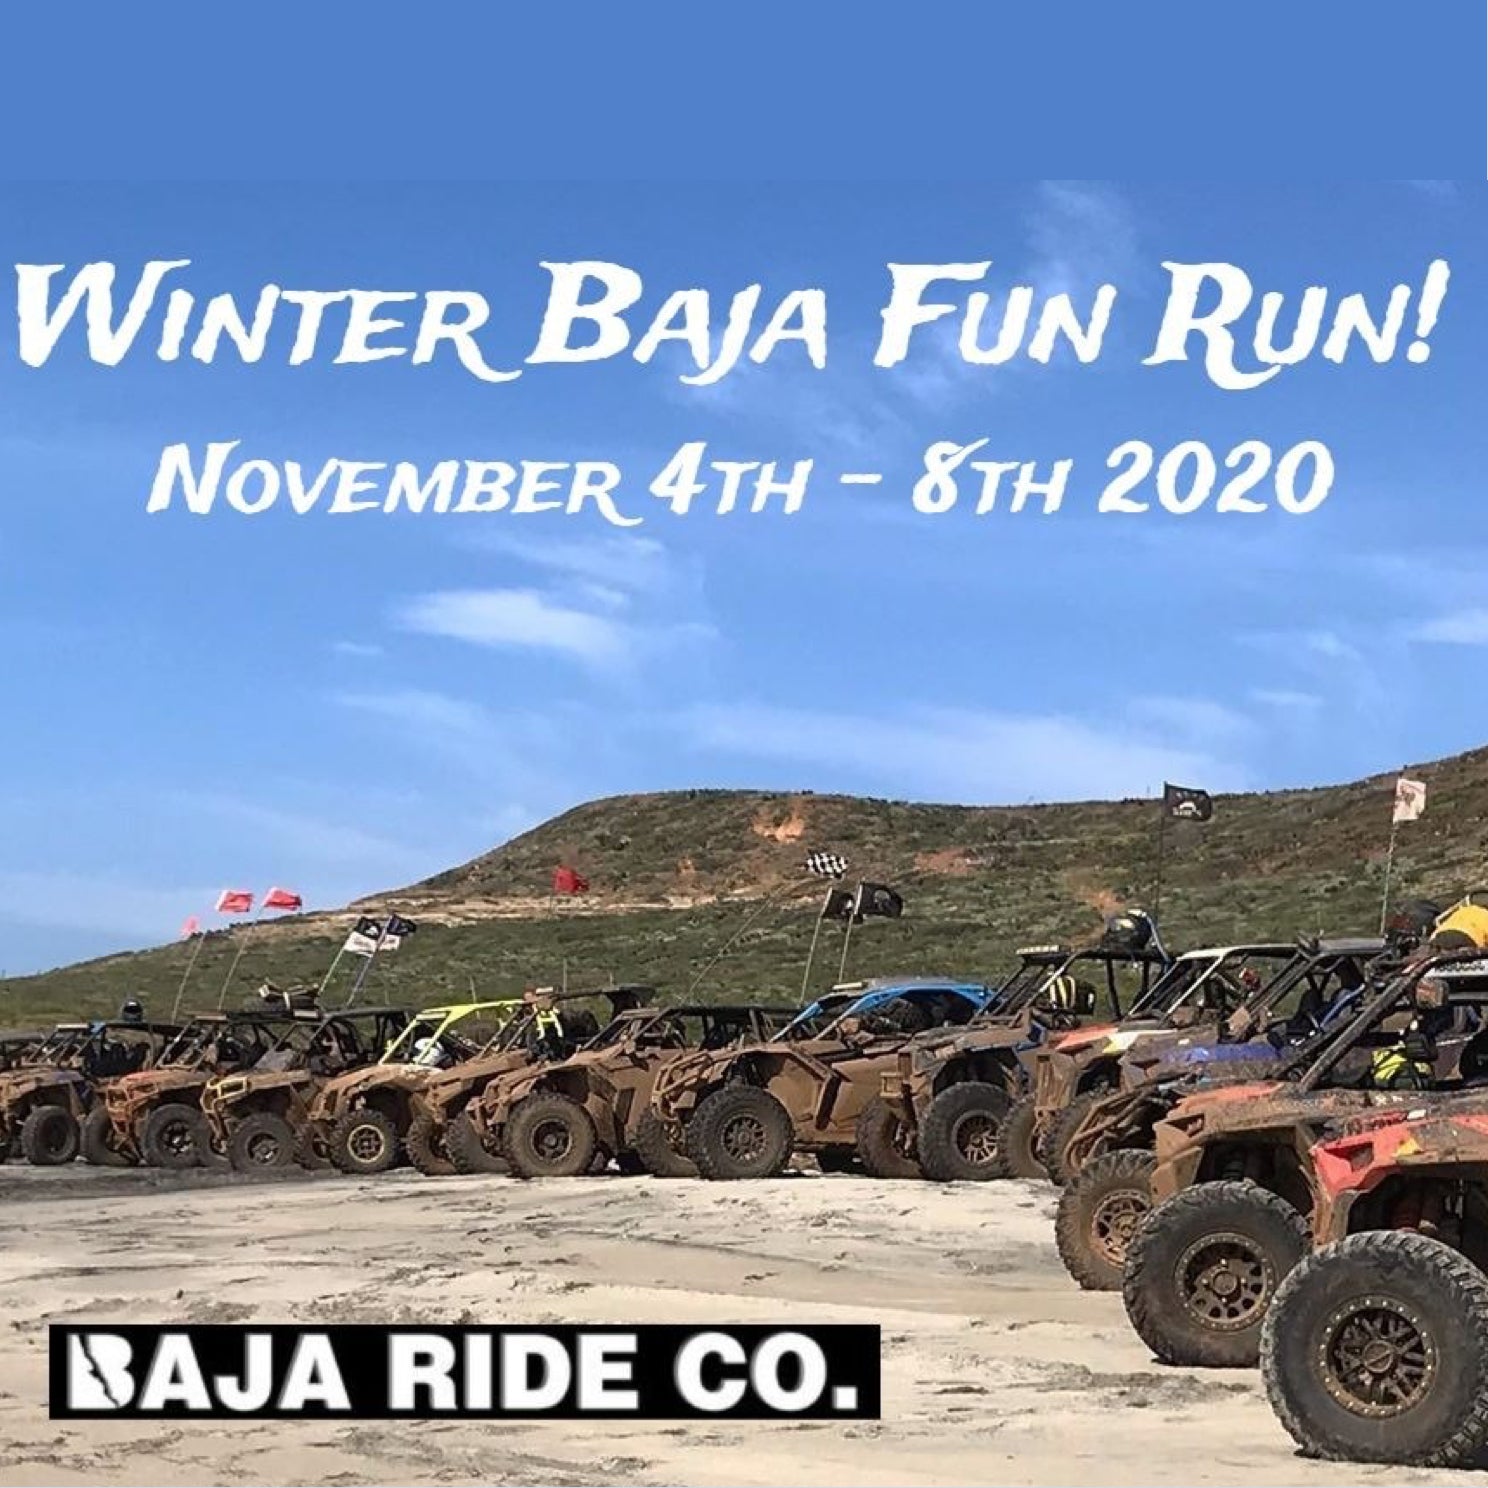 Baja Ride Company off road utv tours